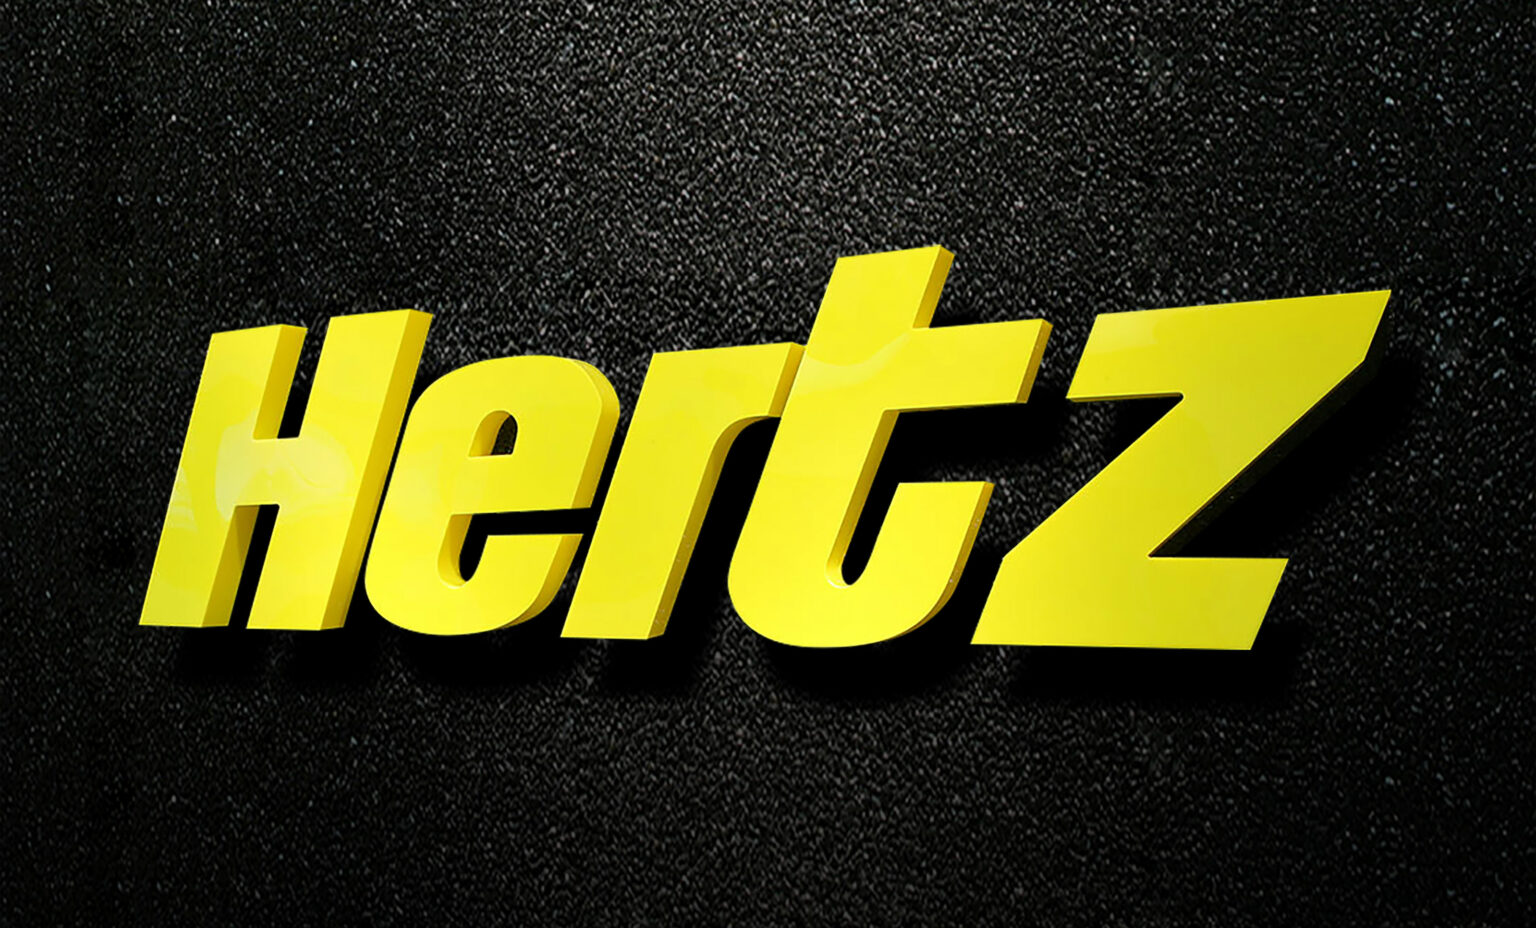 Hertz Fret Cut Logo